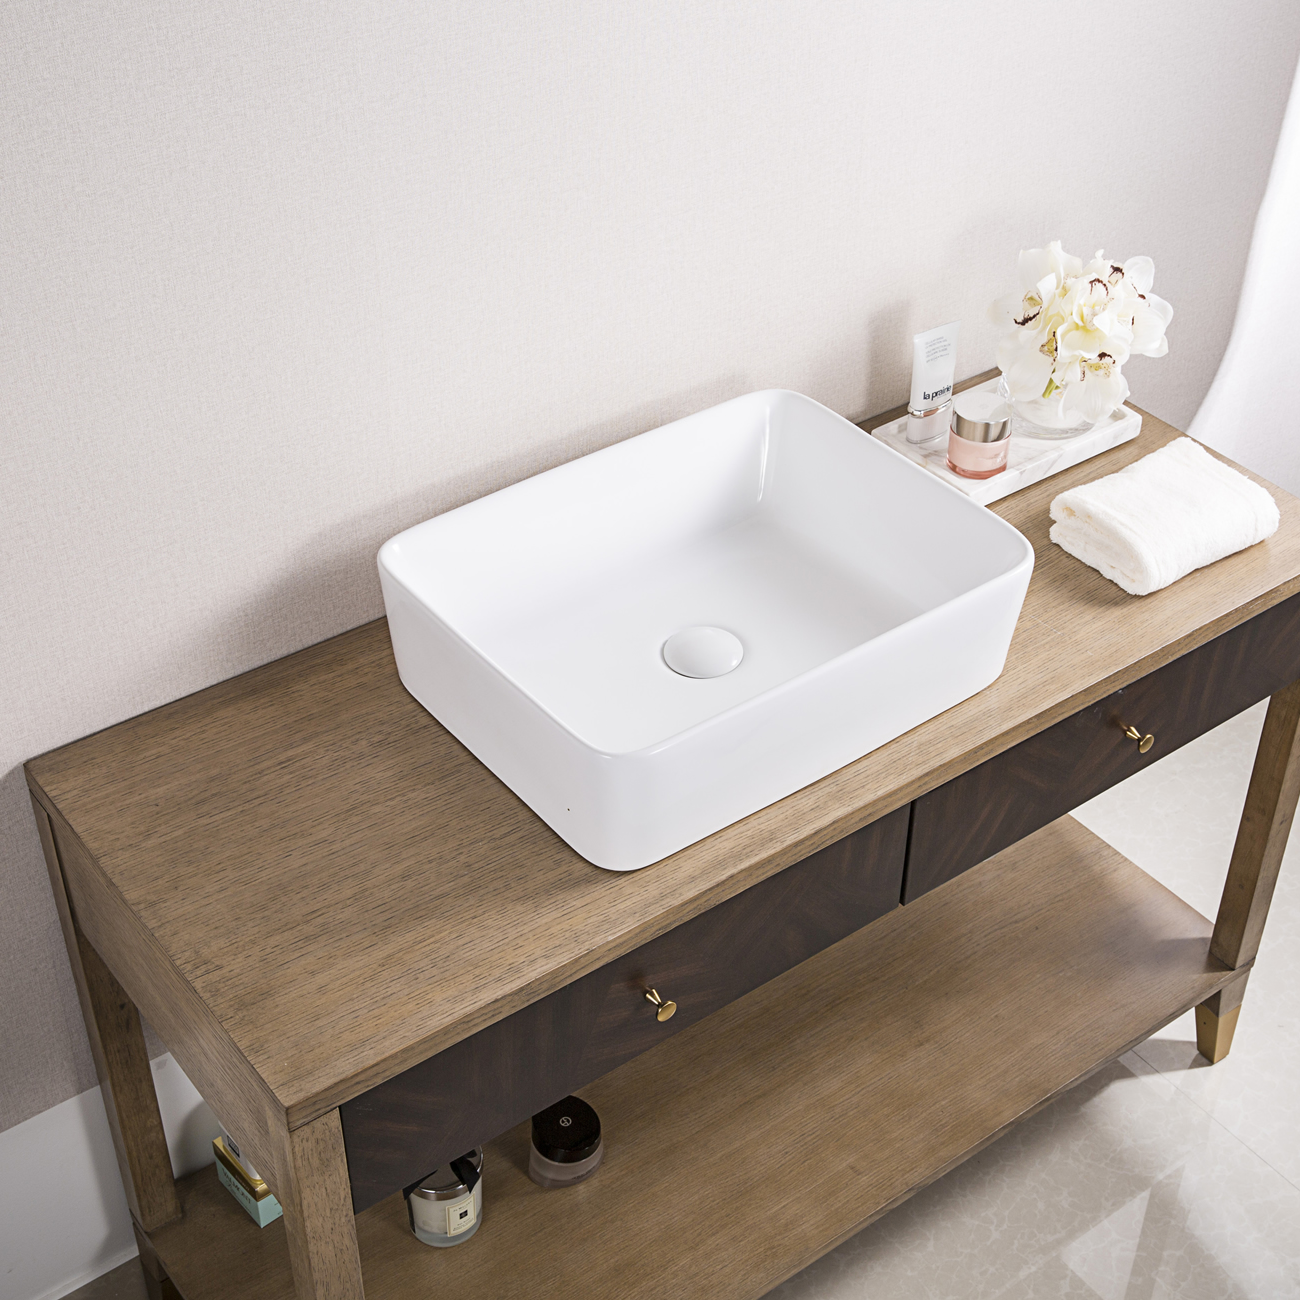 19" Rectangular Above Vanity Counter Bathroom Porcelain Ceramic Vessel Sink in White